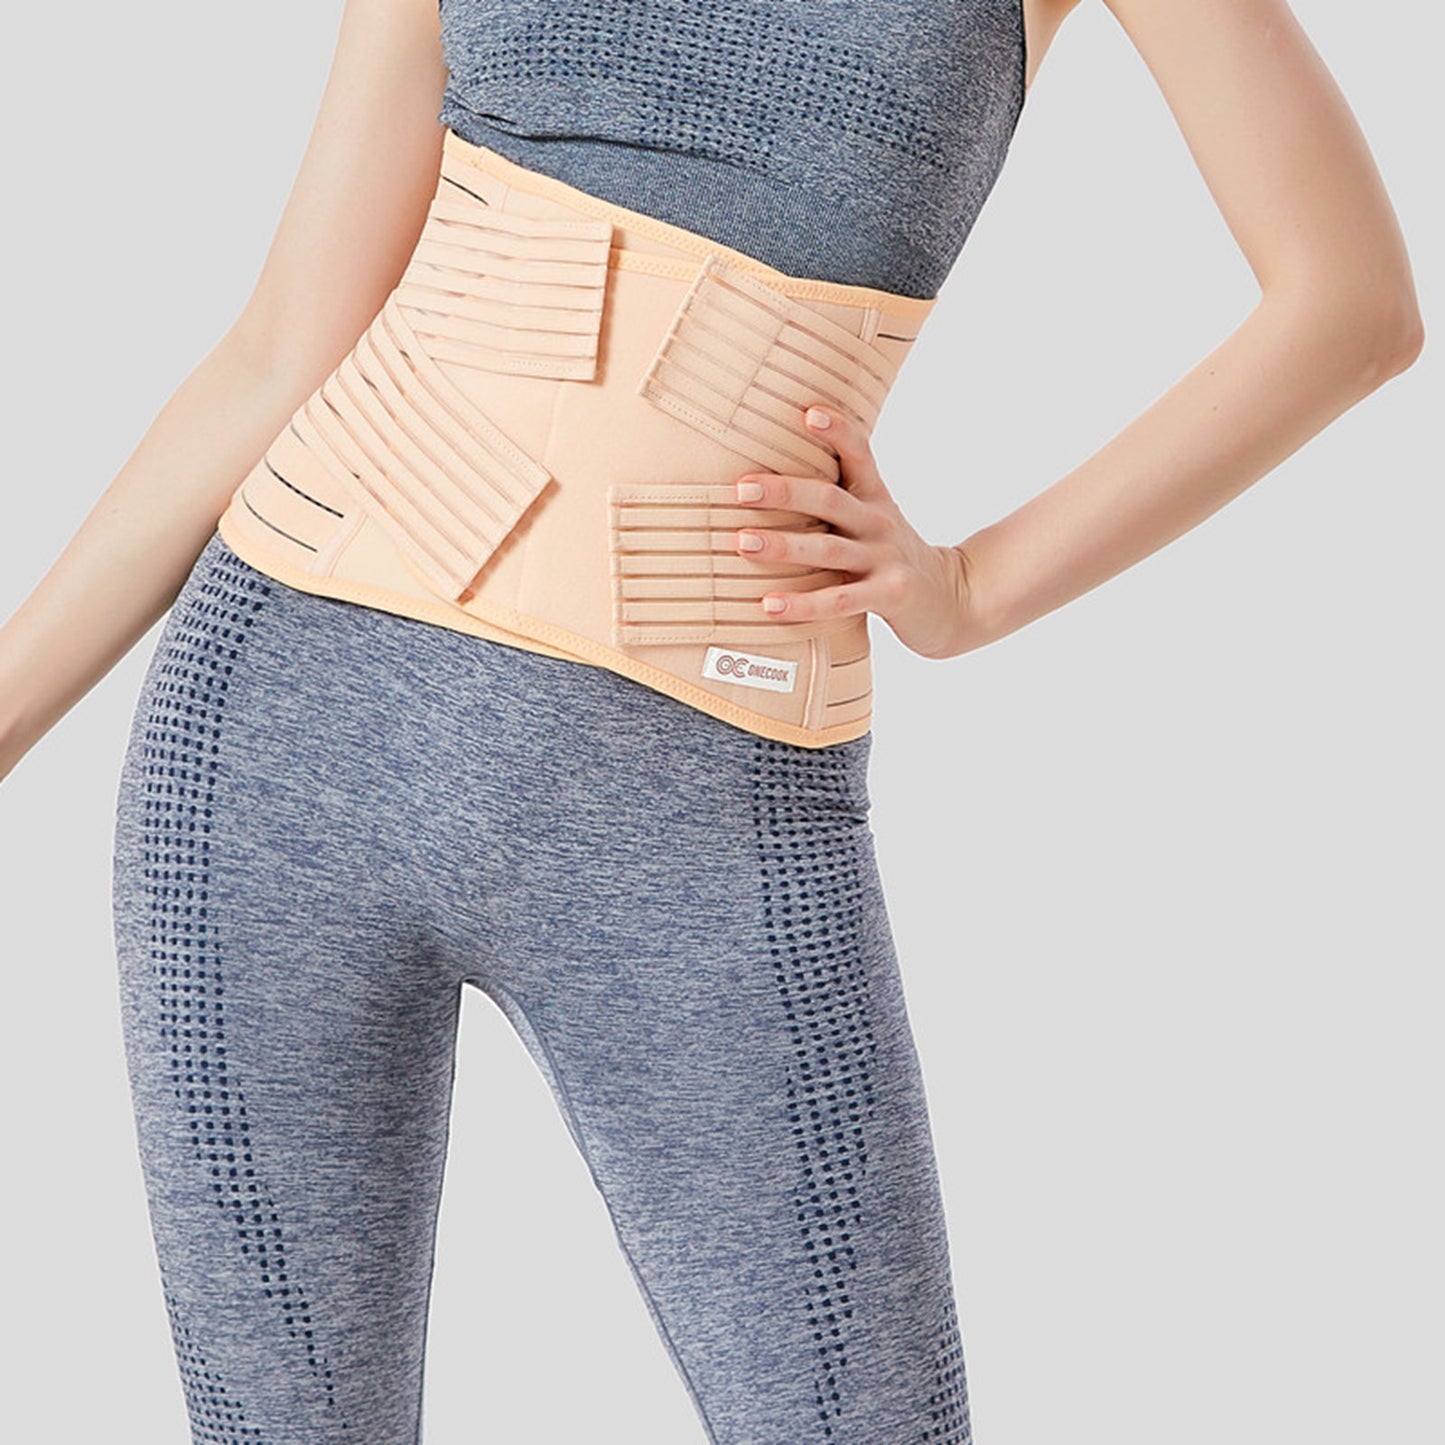 Women Waist Trainer Belt Body Shaper Belly Wrap Trimmer Slimmer Compression Band - Pantsnsox